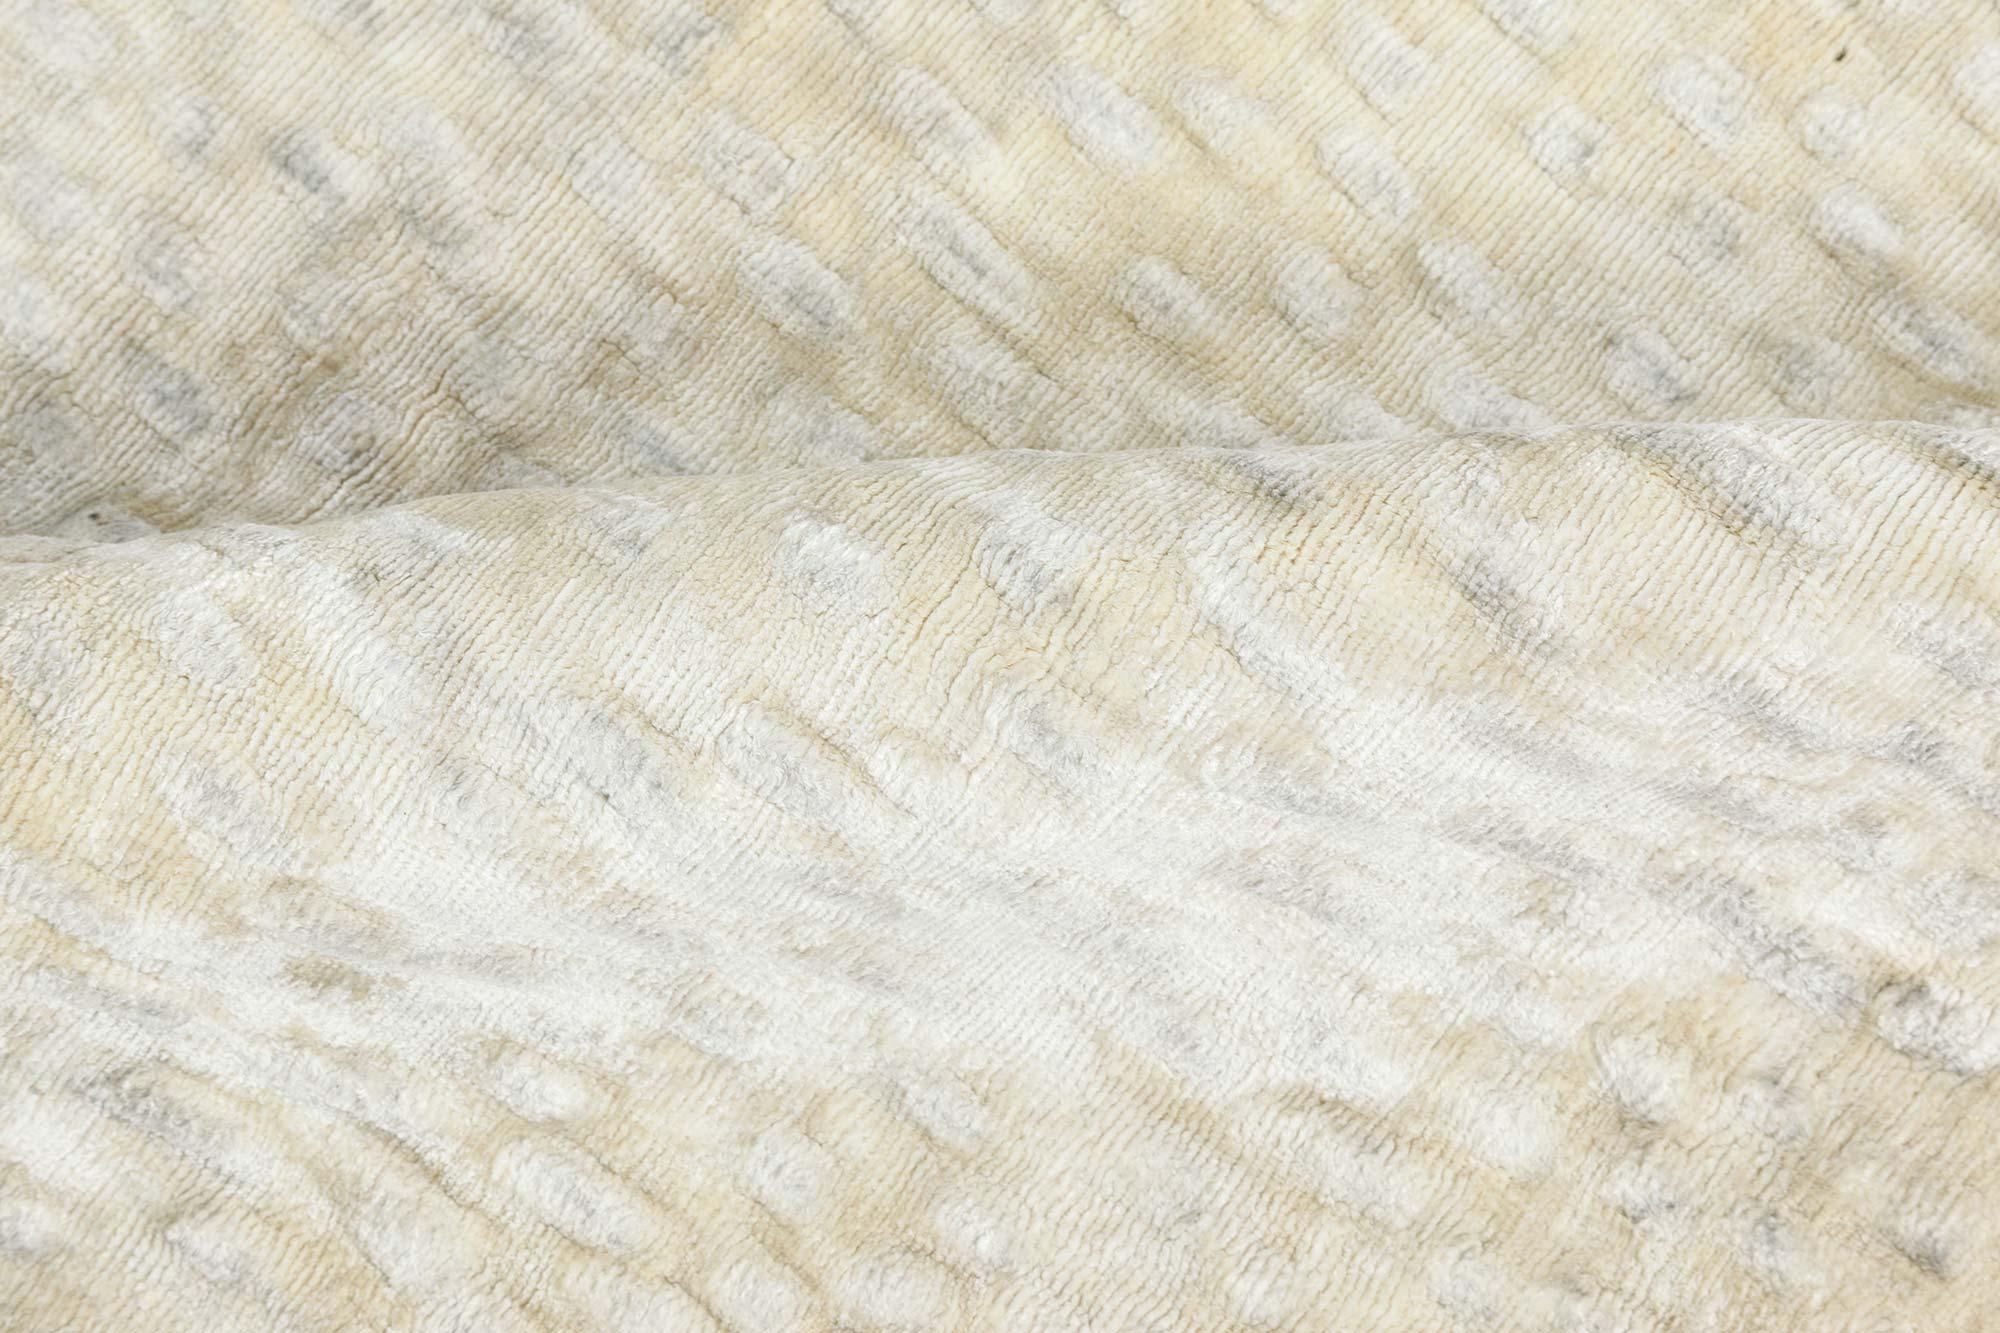 Contemporary sand Dunes handmade silk rug by Doris Leslie Blau.
Size: 11.1